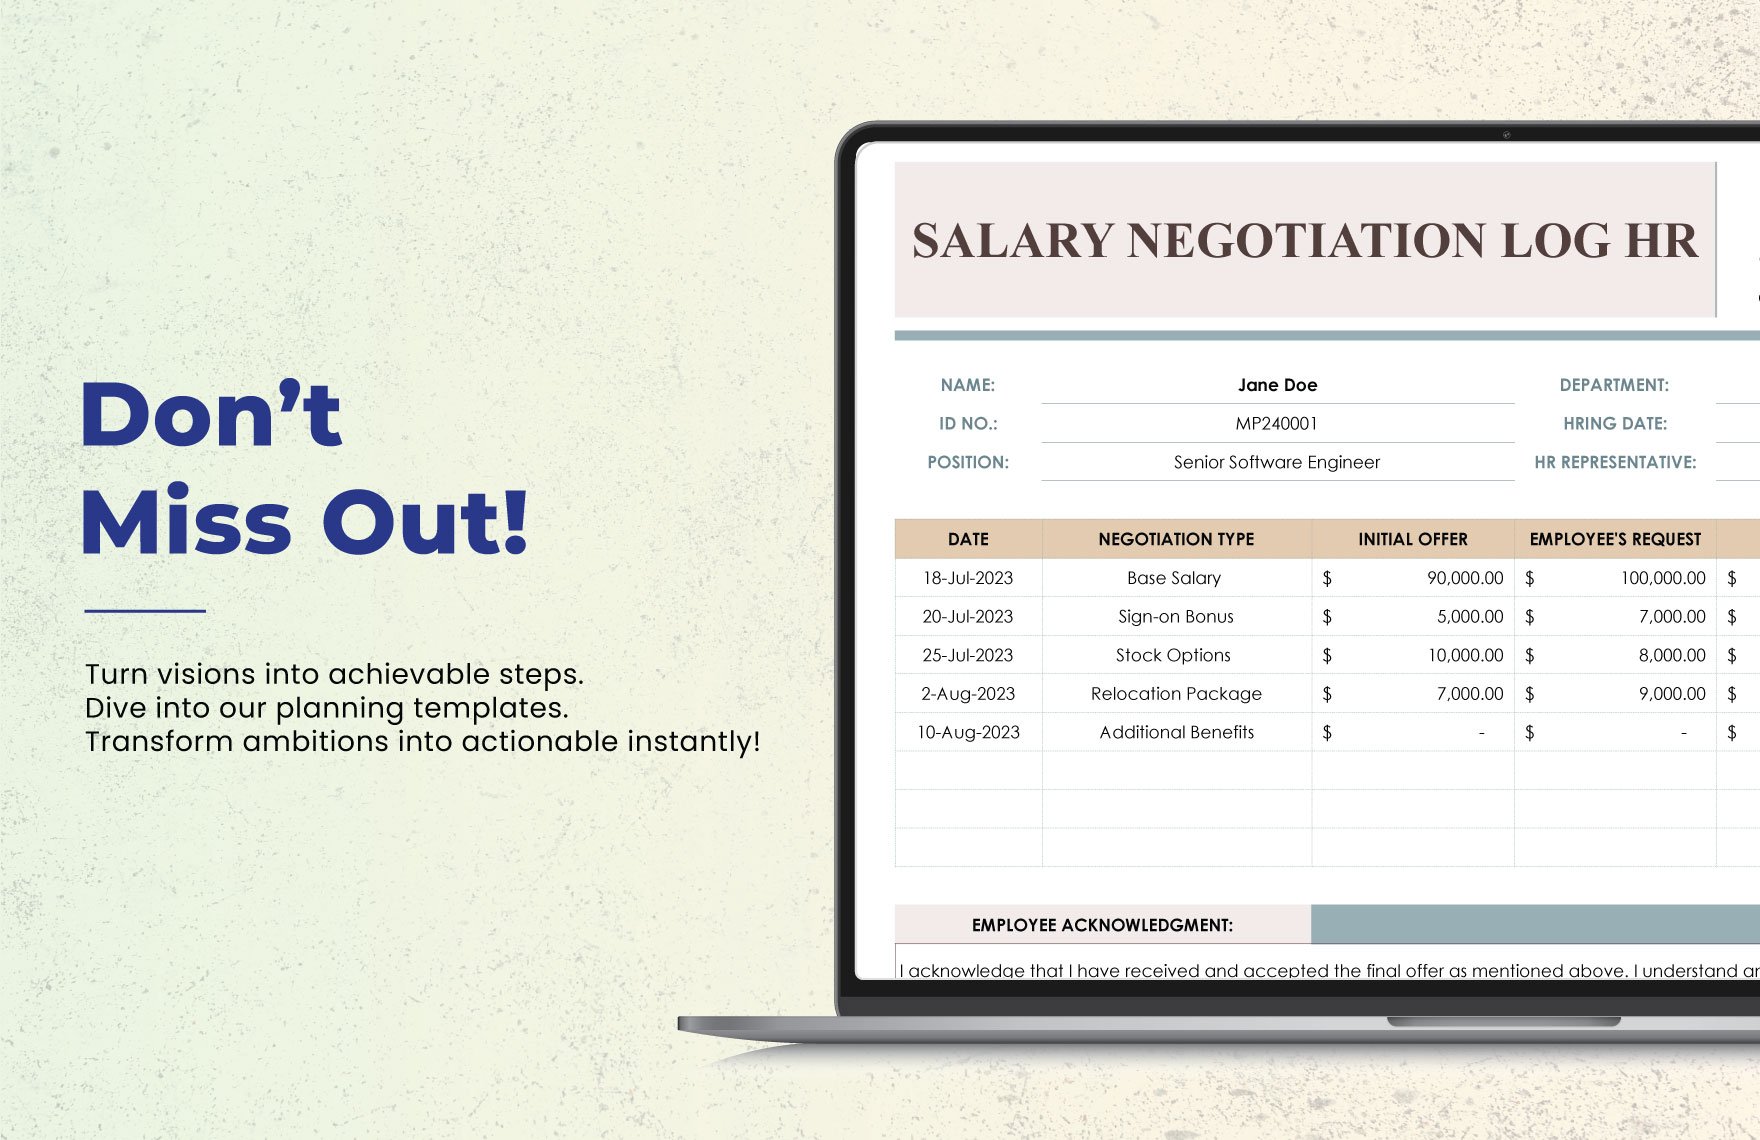 Salary Negotiation Log HR Template